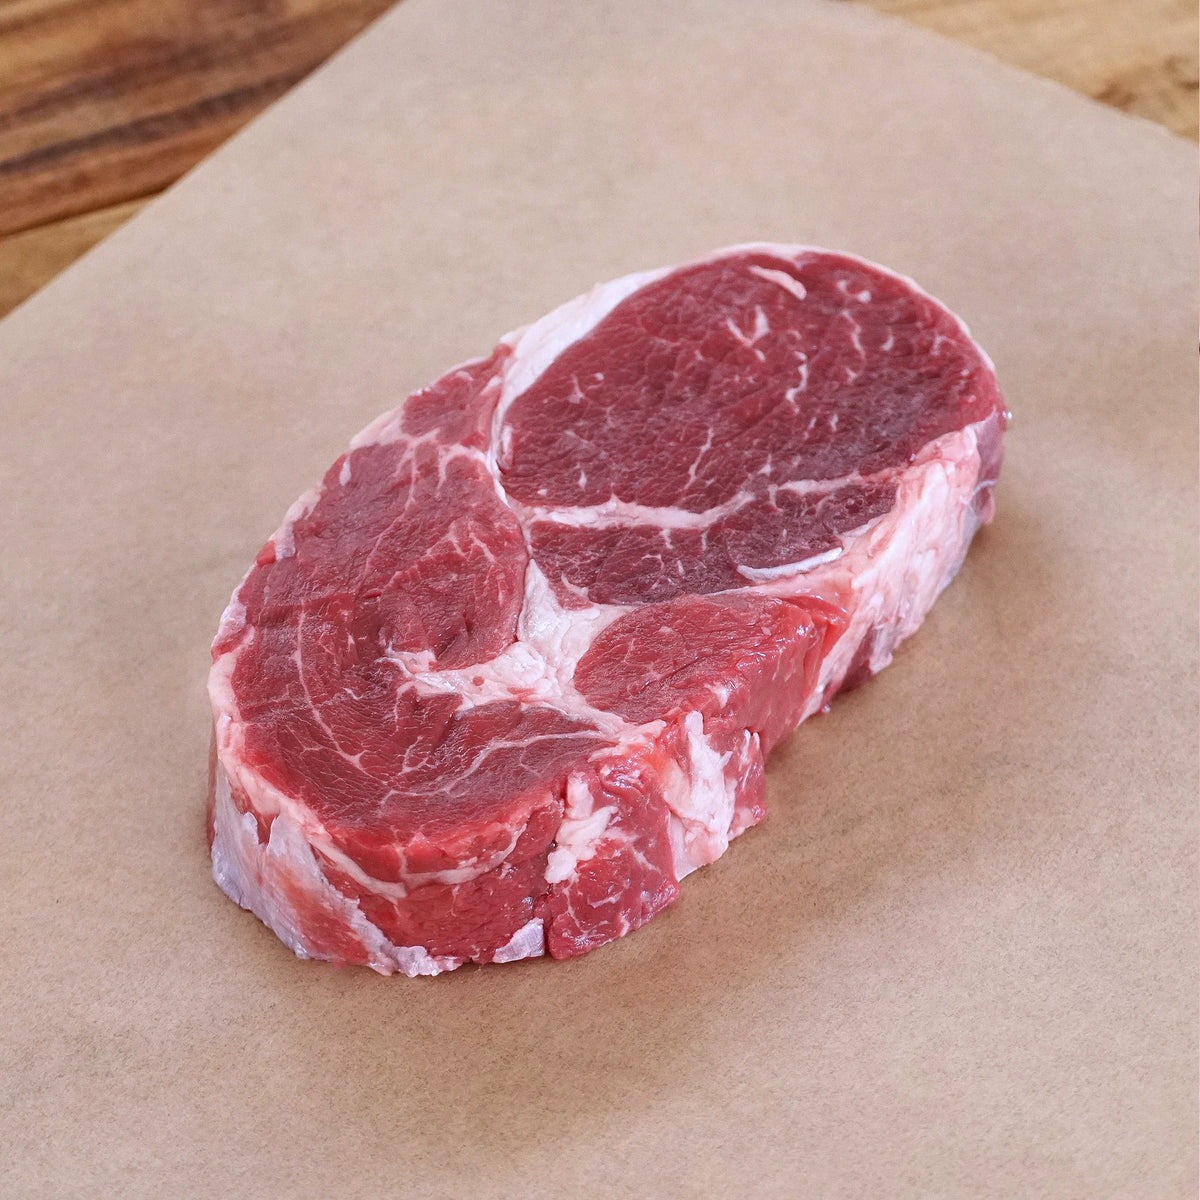 Grass-Fed Premium Beef Ribeye Steak Australia (200g) - Horizon Farms